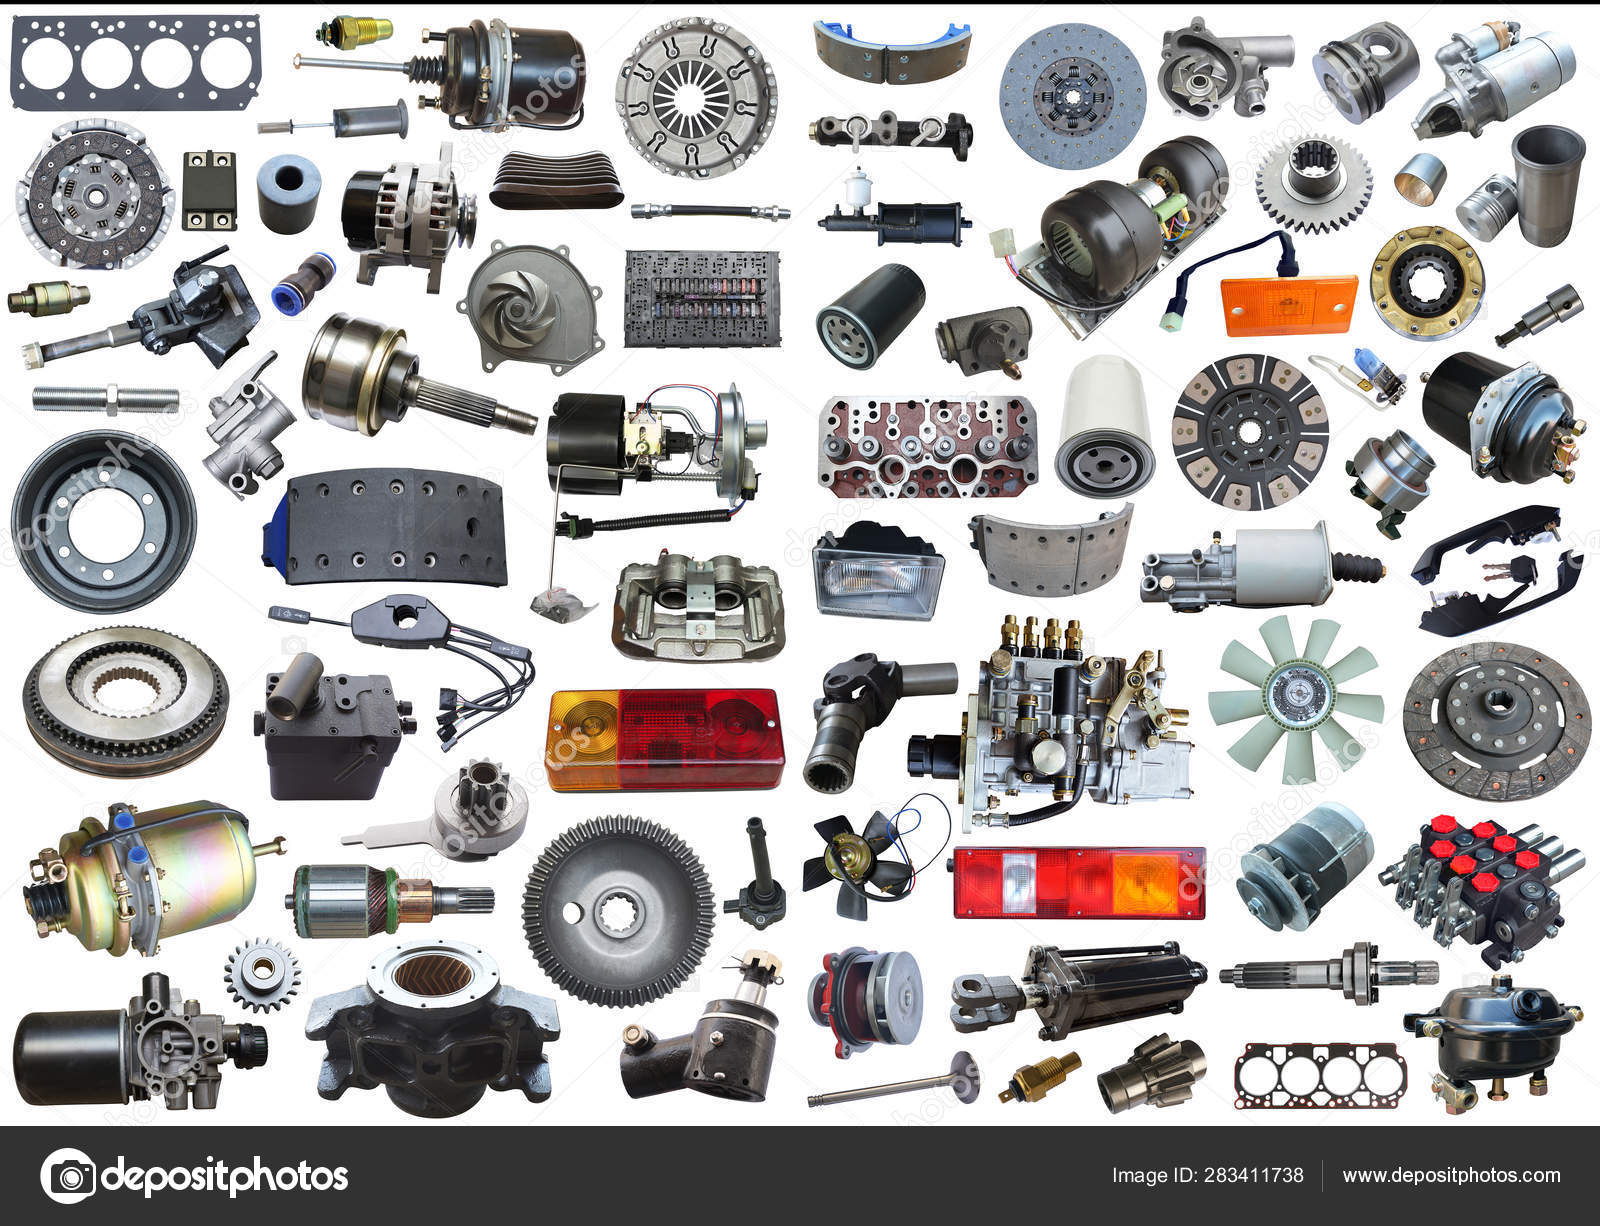 https://st4.depositphotos.com/6777328/28341/i/1600/depositphotos_283411738-stock-photo-collage-parts-auto.jpg